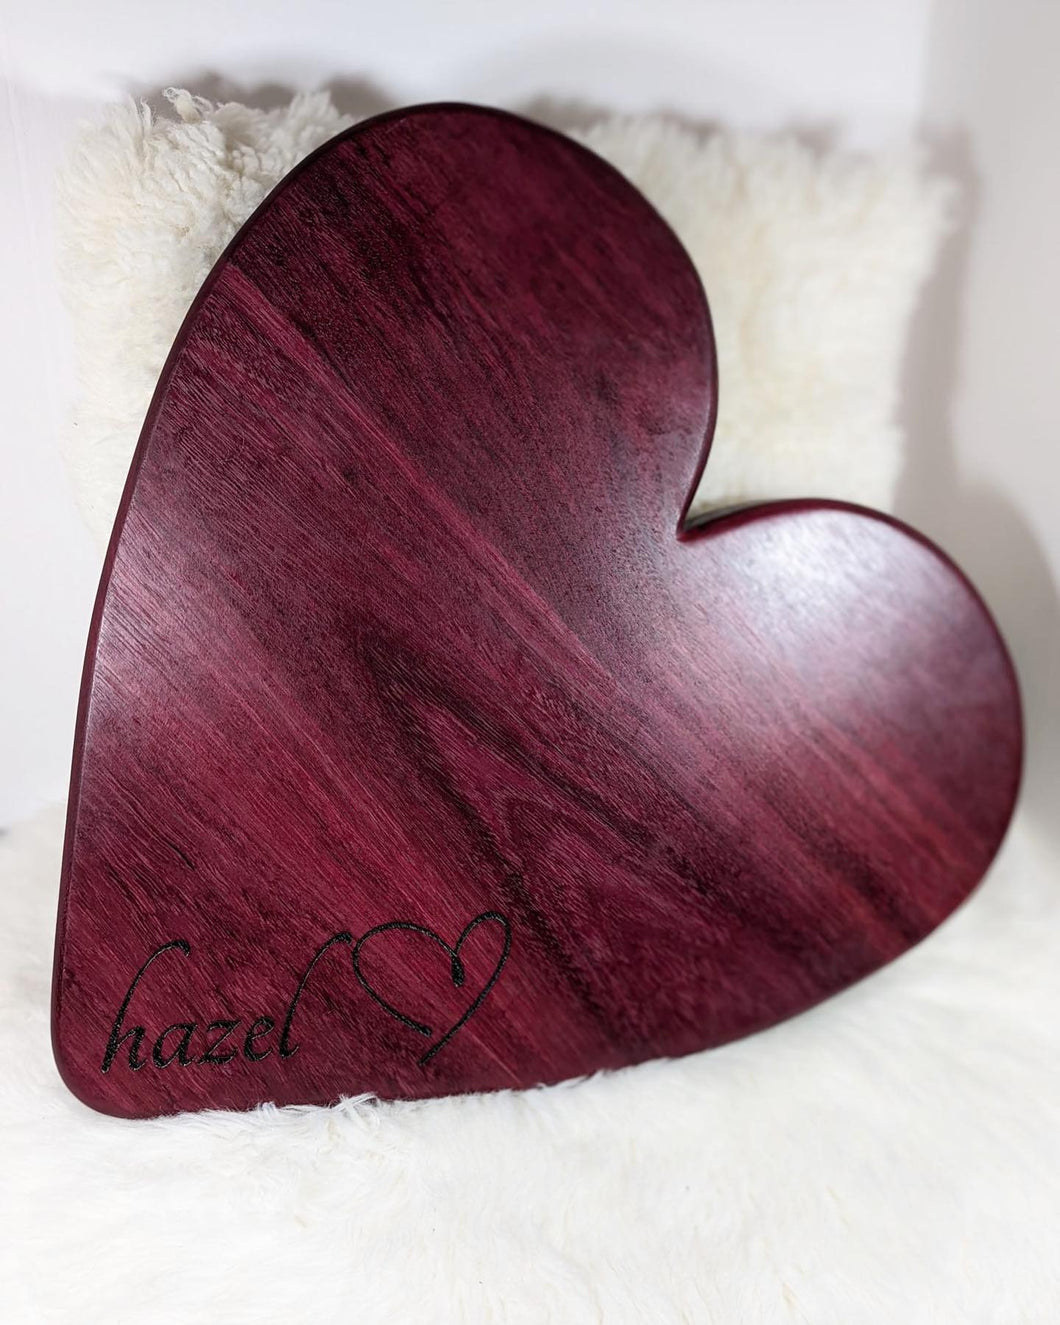 Heart Shaped Chopping Board